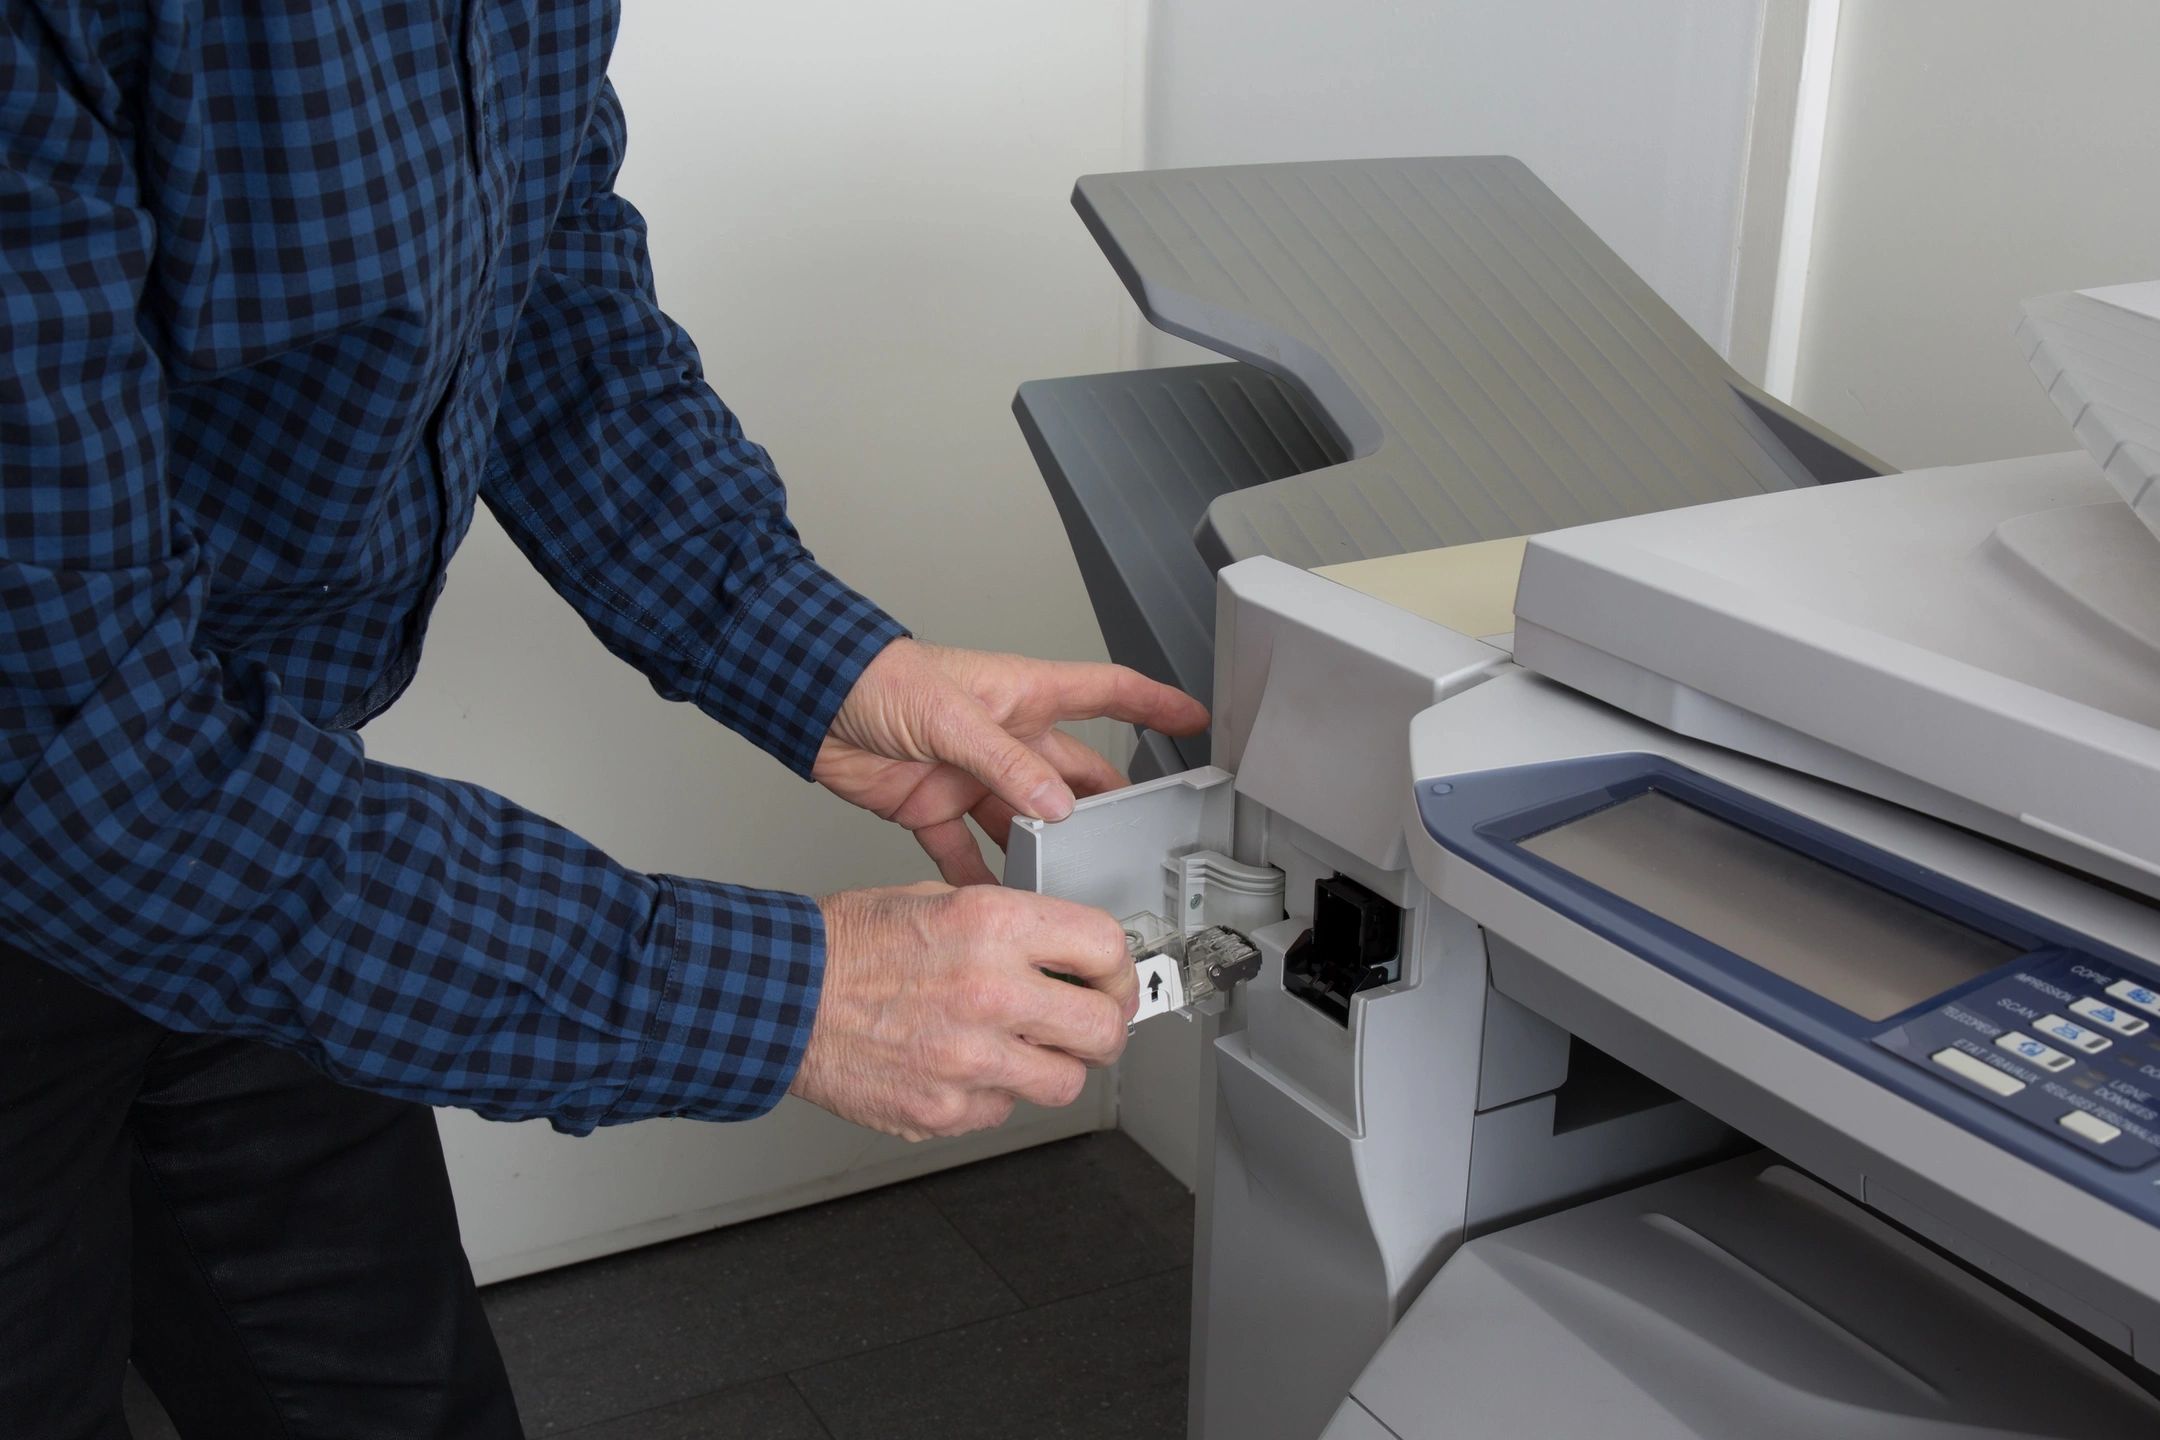 Customer needs printer repair in Glendale Az